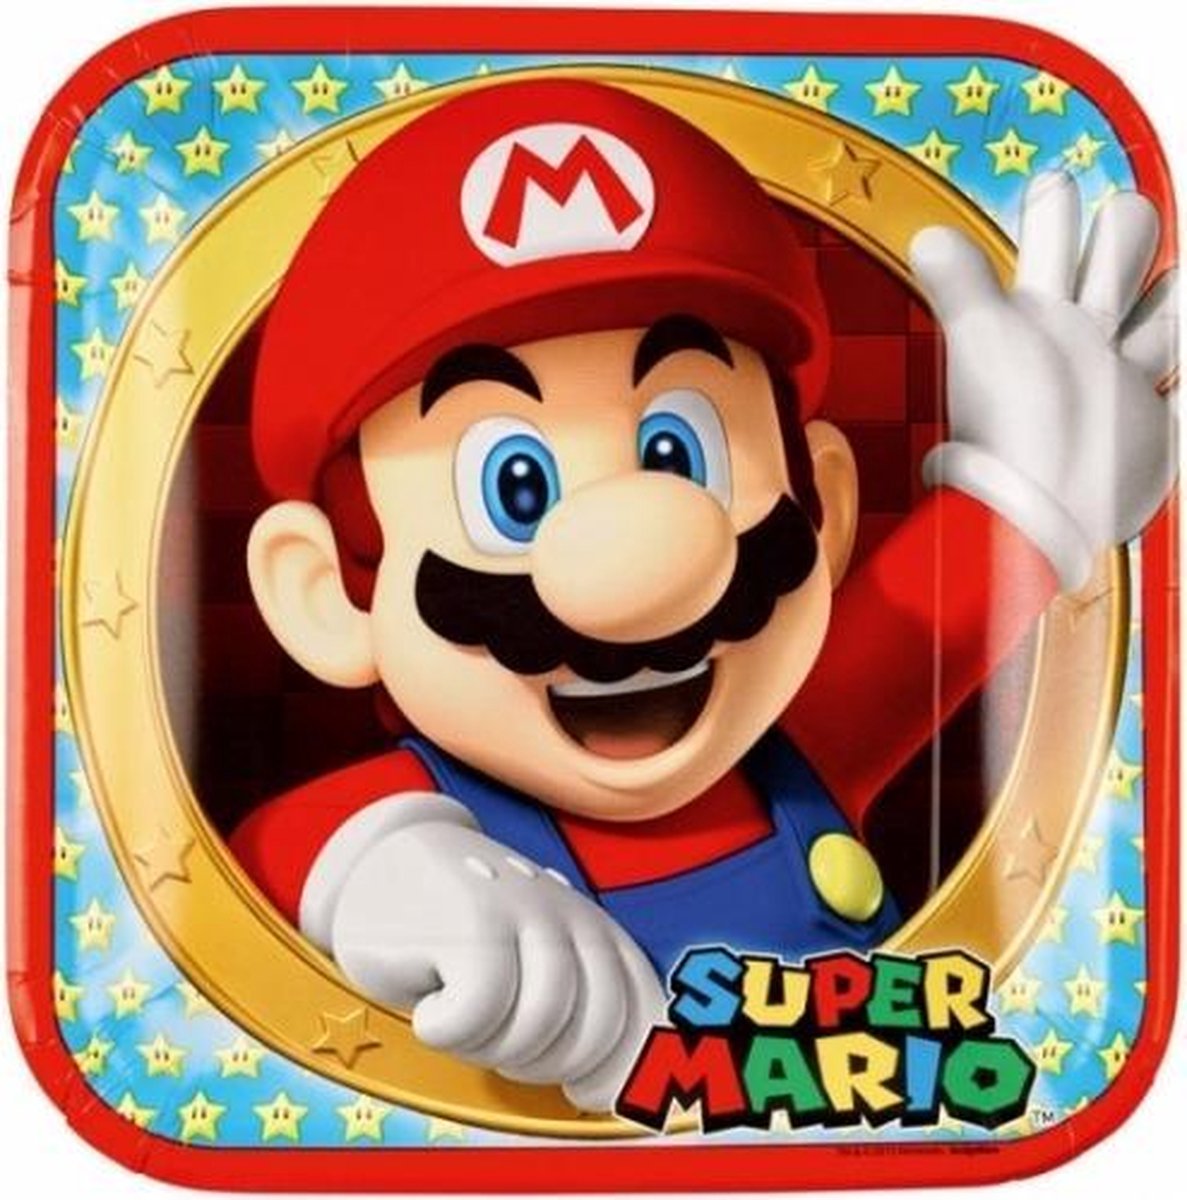 Super Mario bordjes 8 stuks